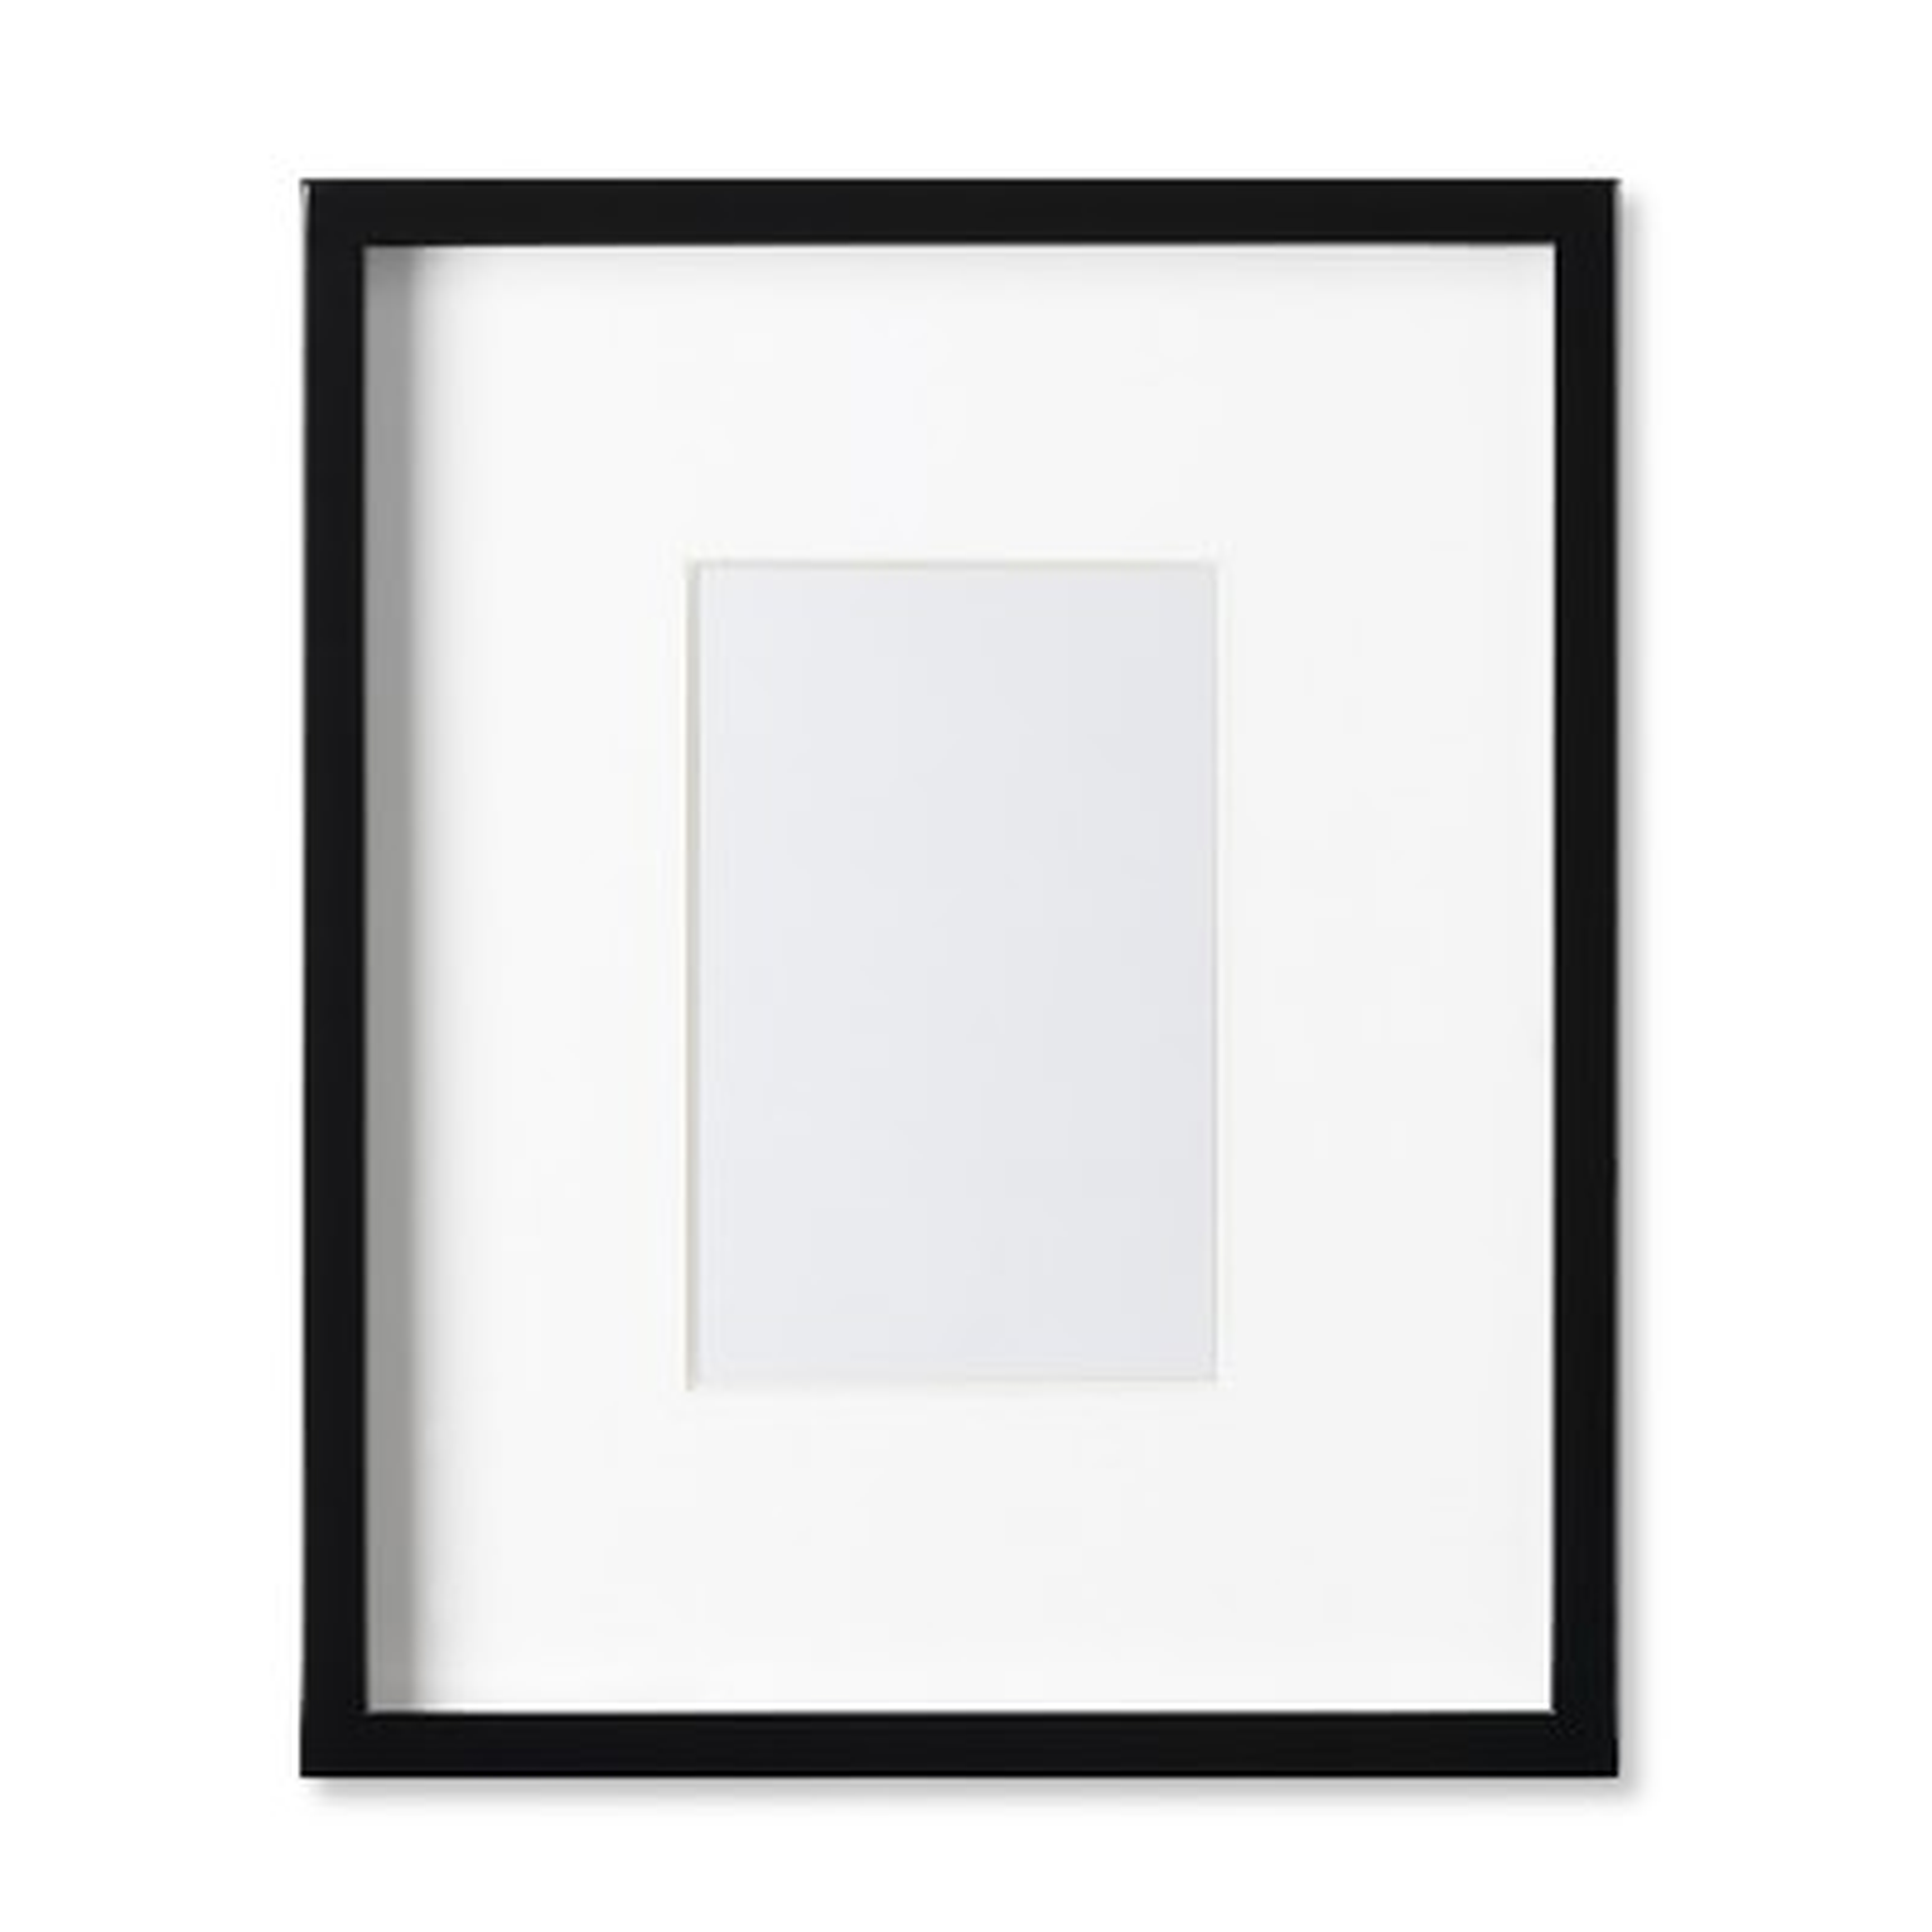 Black Lacquer Gallery Picture Frame, 4" X 6" - Williams Sonoma